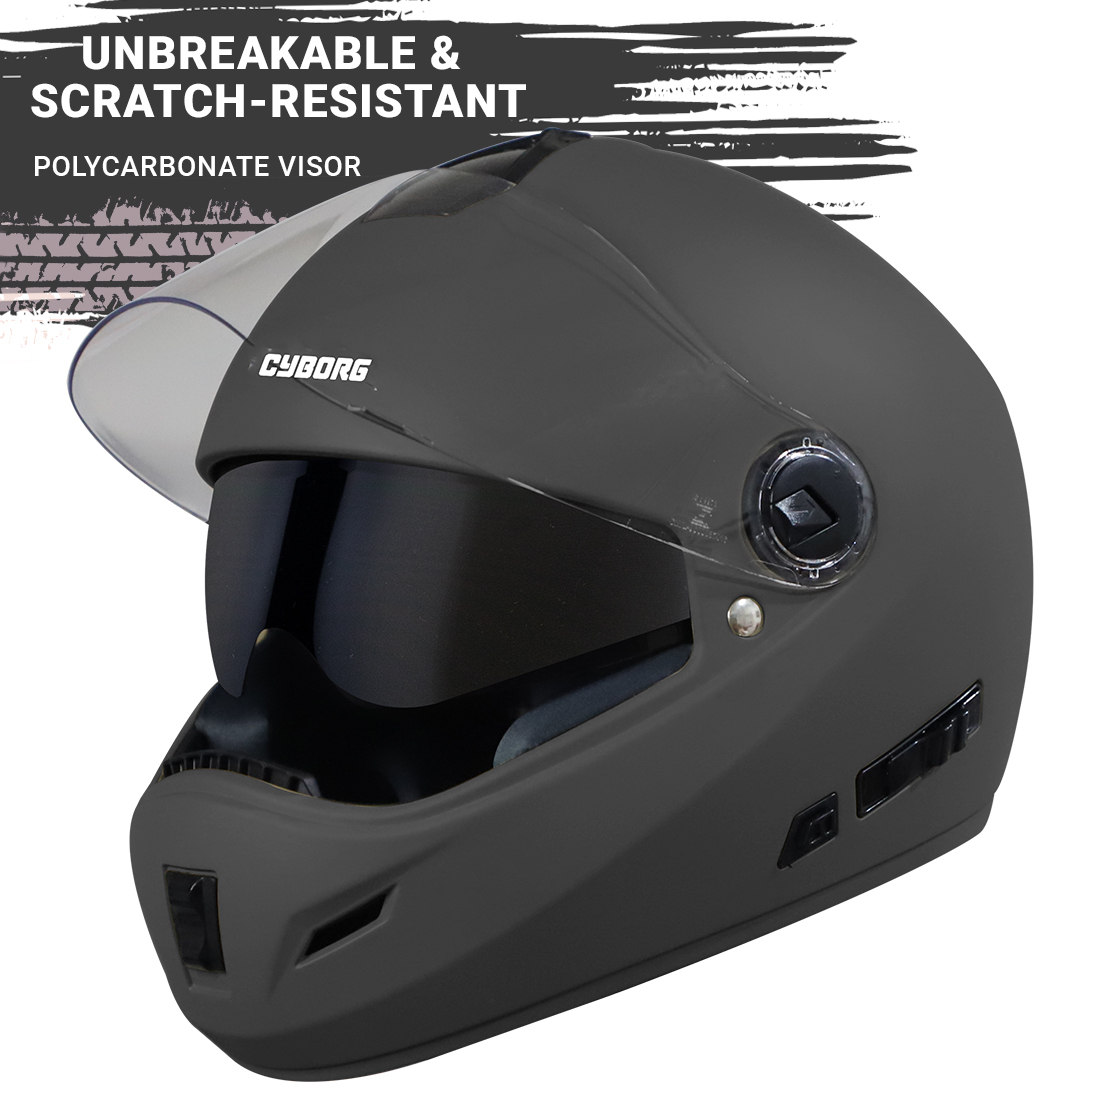 Steelbird SB-39 Cyborg ISI Certified Full Face Helmet For Men And Women With Sun Shield (Matt H. Grey)